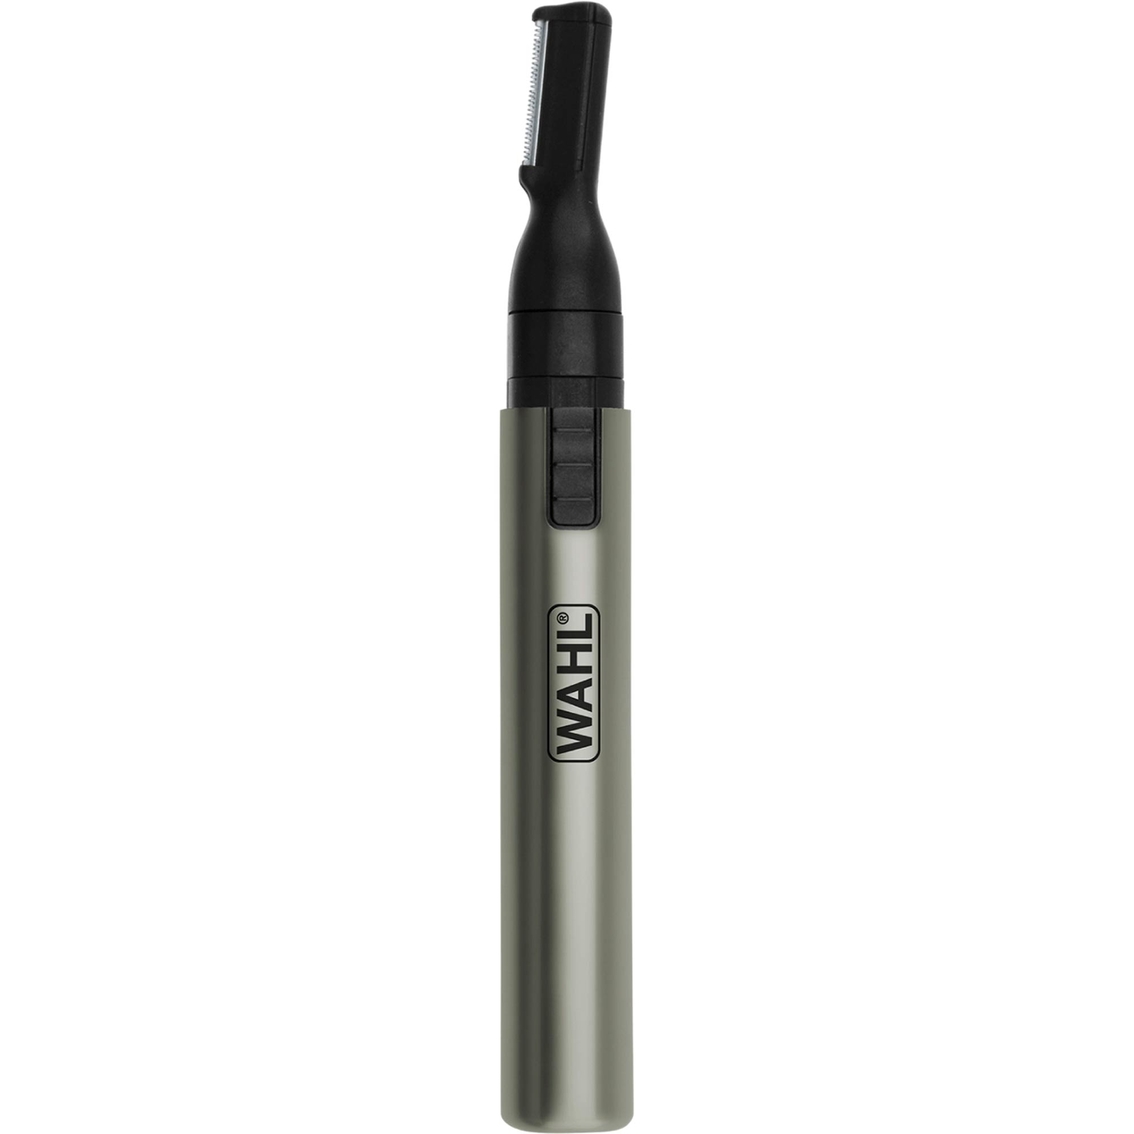 wahl micro groomsman lithium pen trimmer reviews